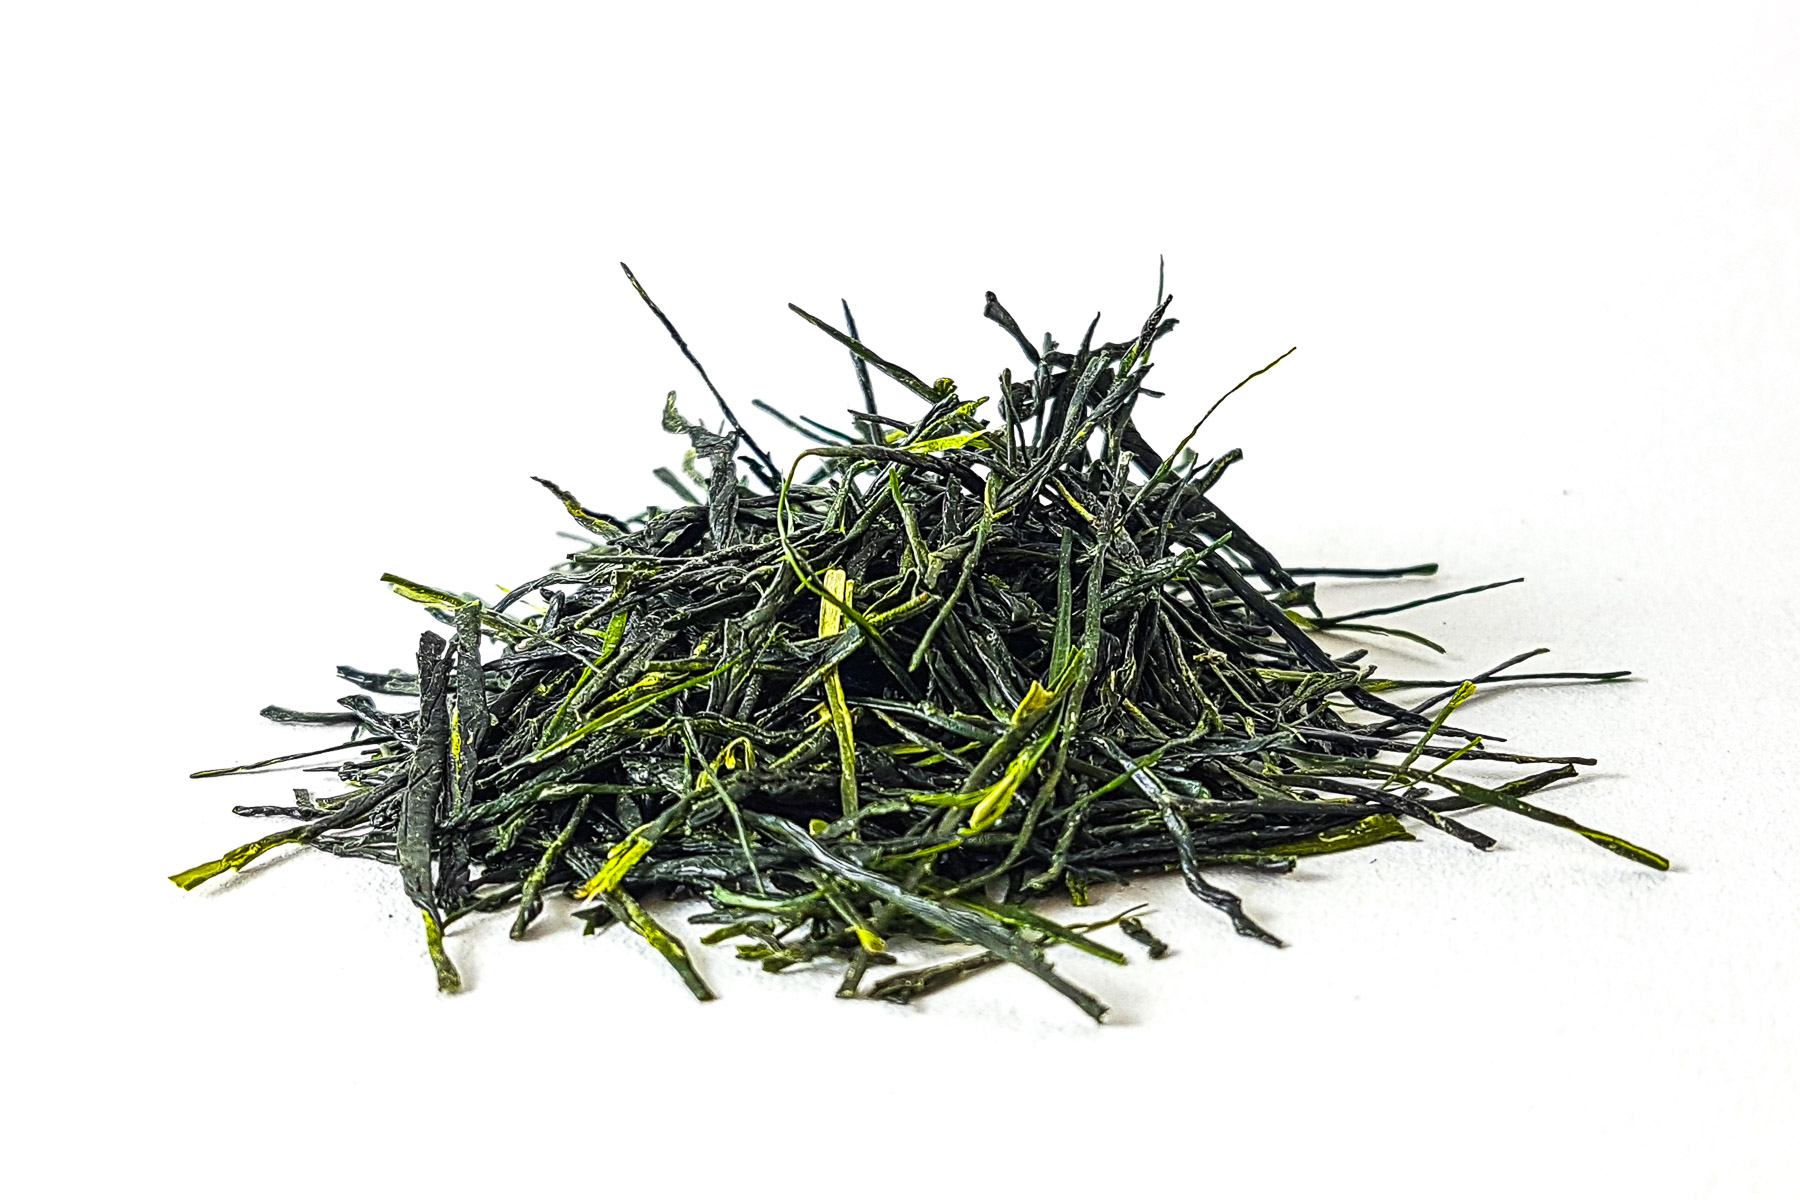 Lalani & Co: Organic Okumidori Kabusecha 2020 Kagoshima Japan Green Tea